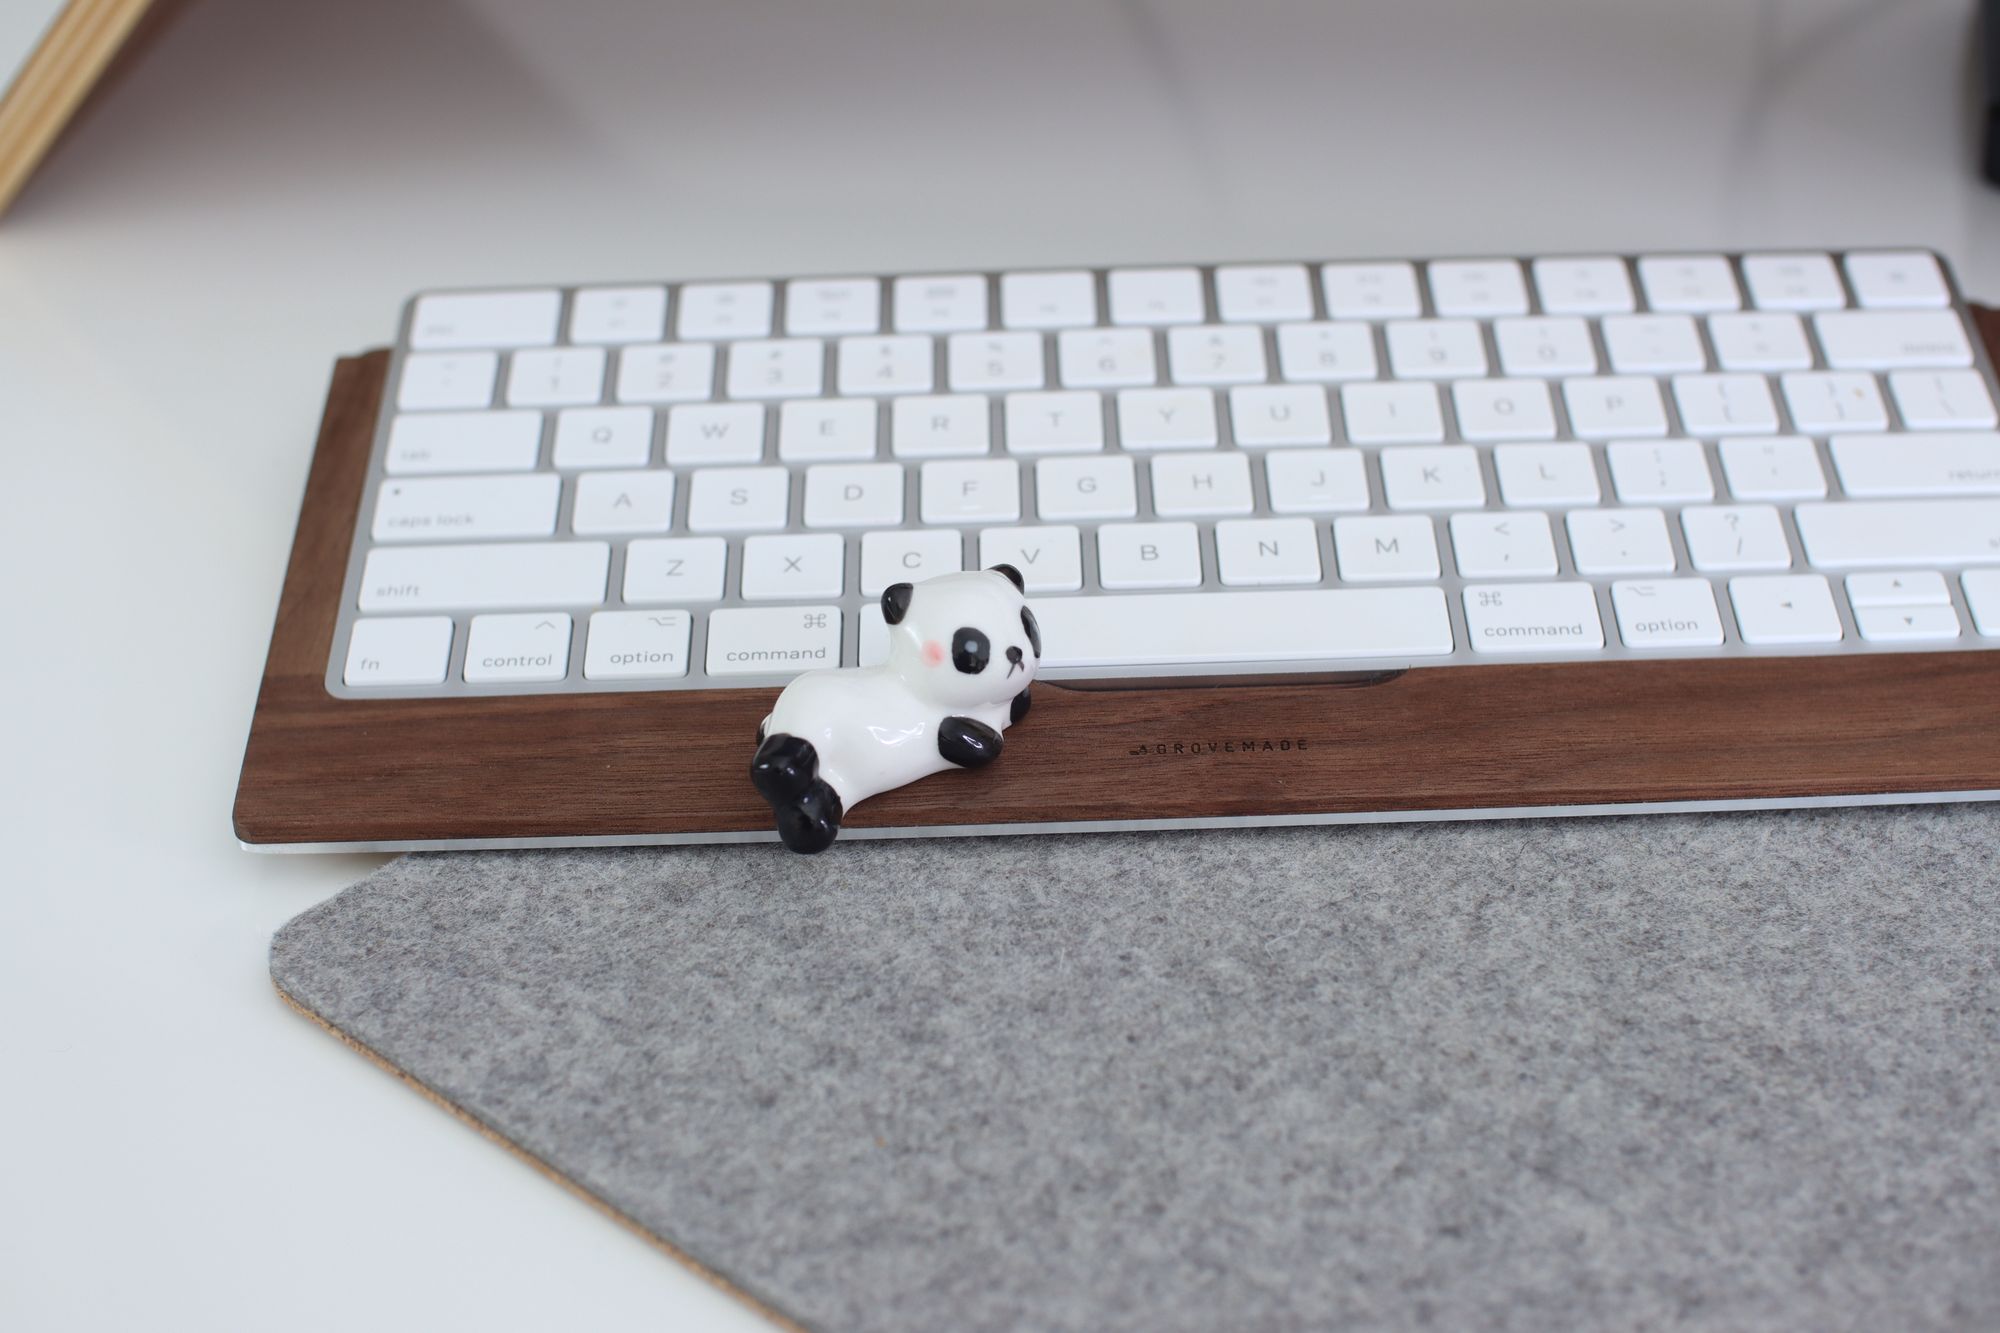 Little ceramic panda sitting on walnut keyboard tray and gray felt mouse